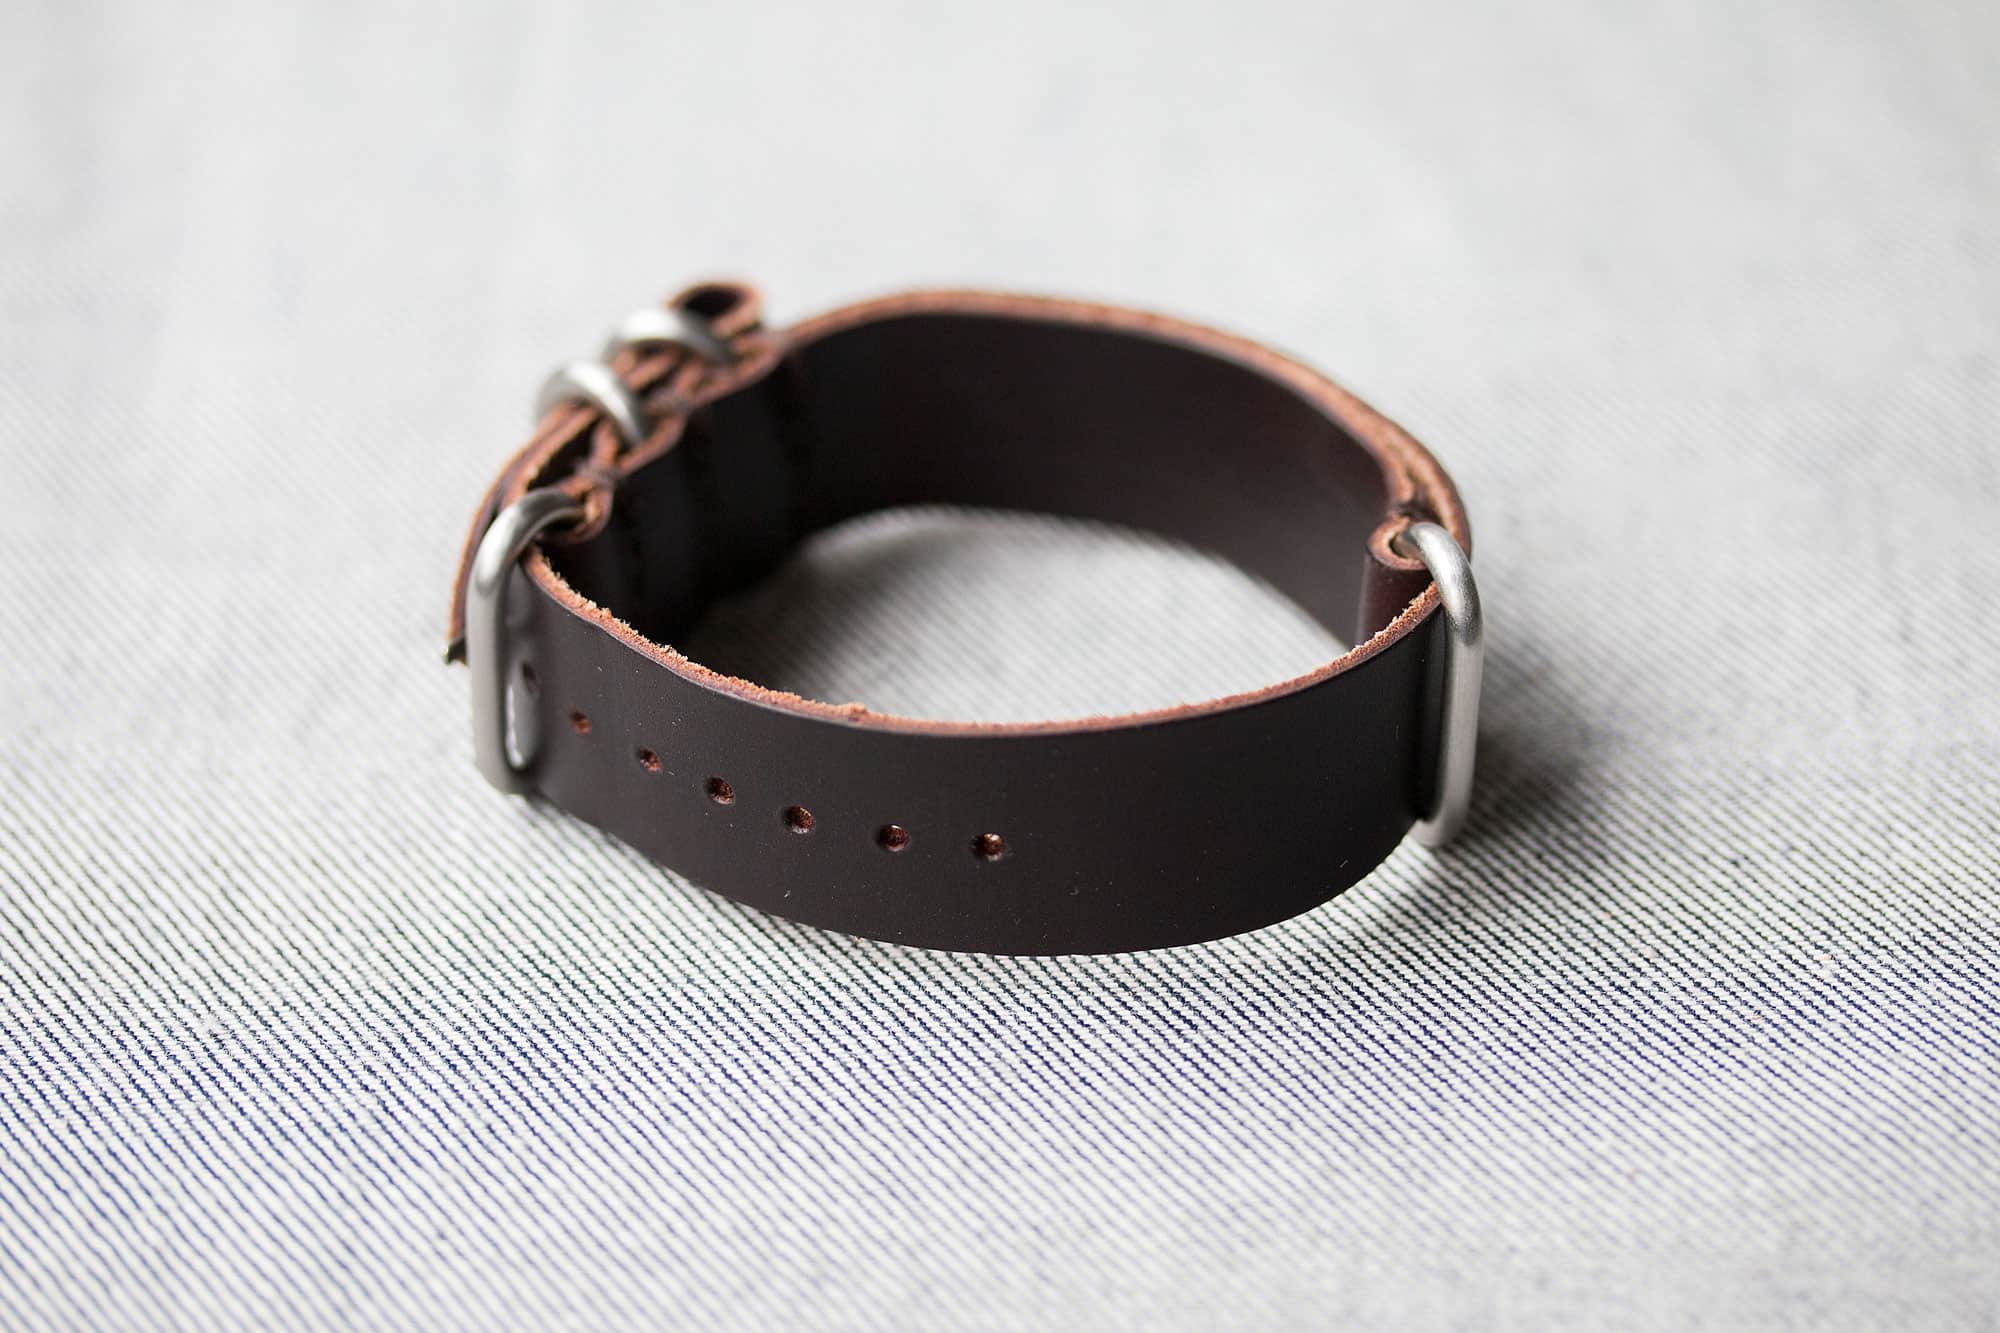 Arvo Black Awristacrat Watch - Mahogany Leather 40mm Mahogany Leather